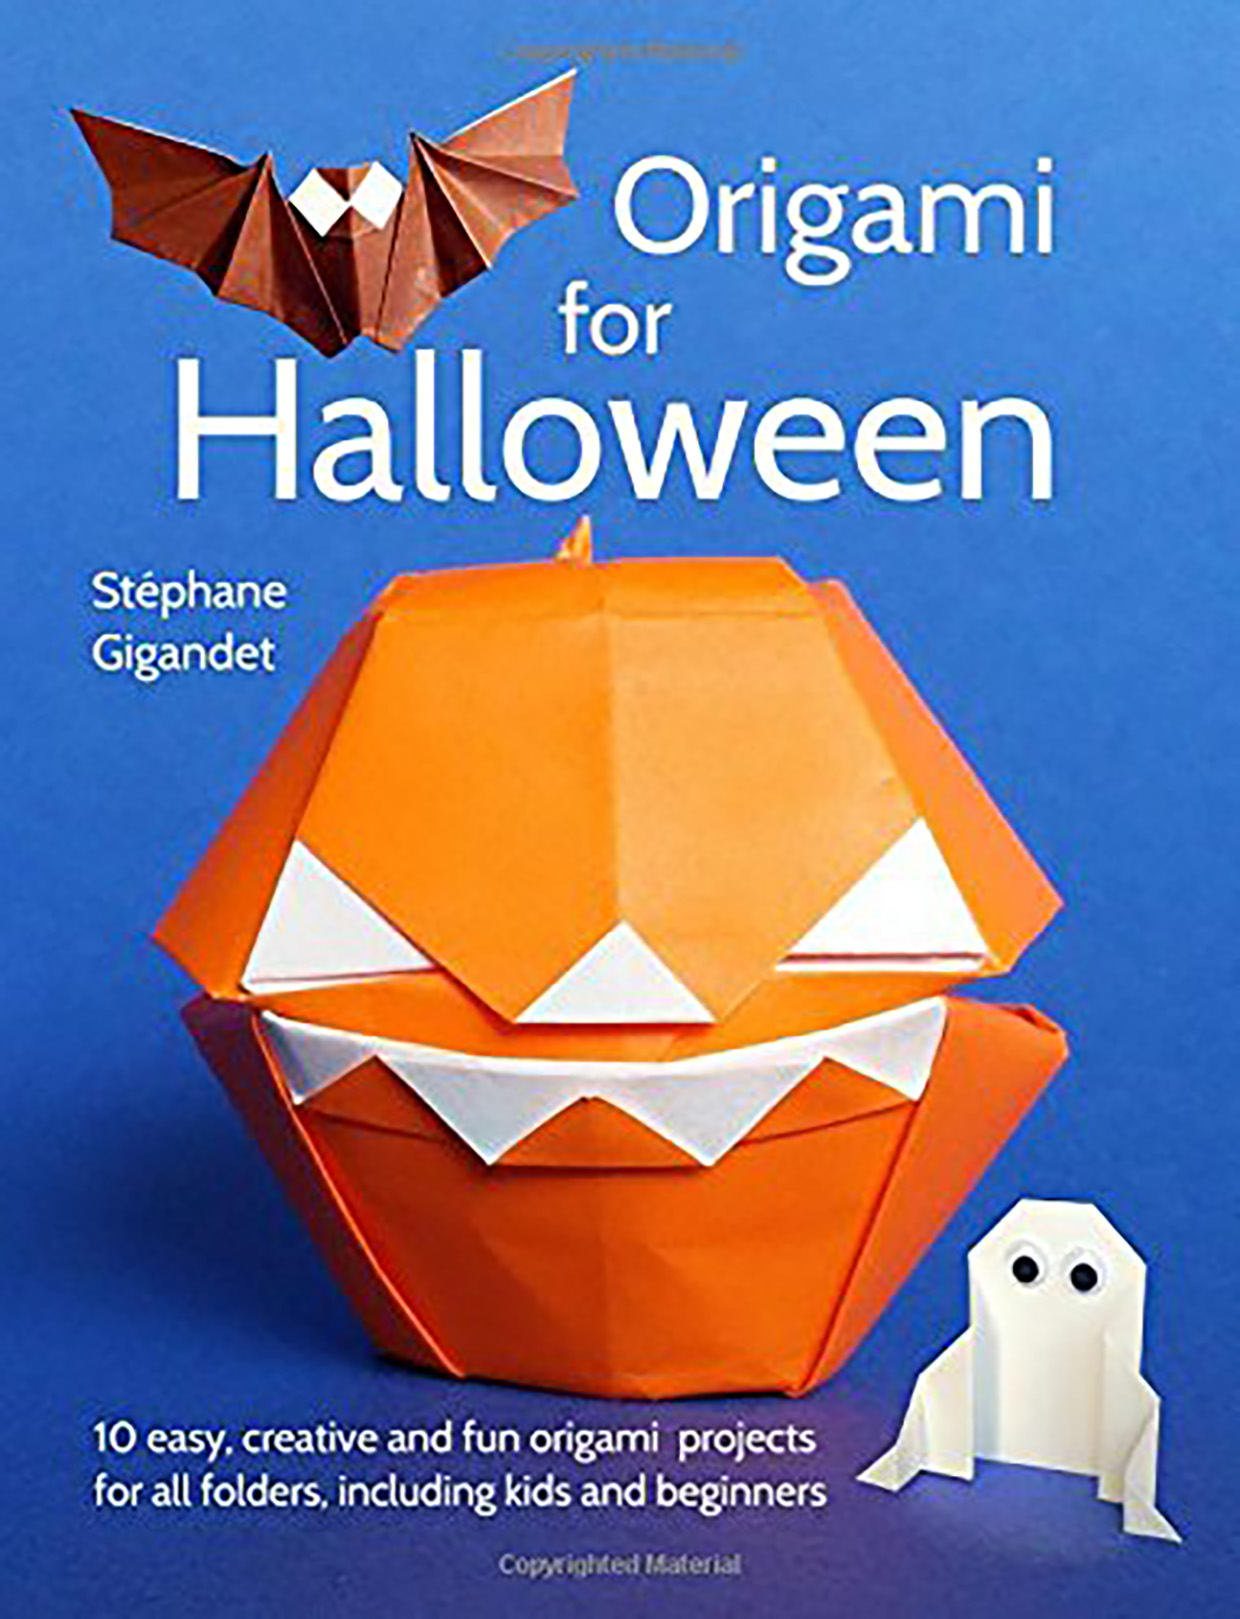 Origami for Halloween by Stéphane Gigandet